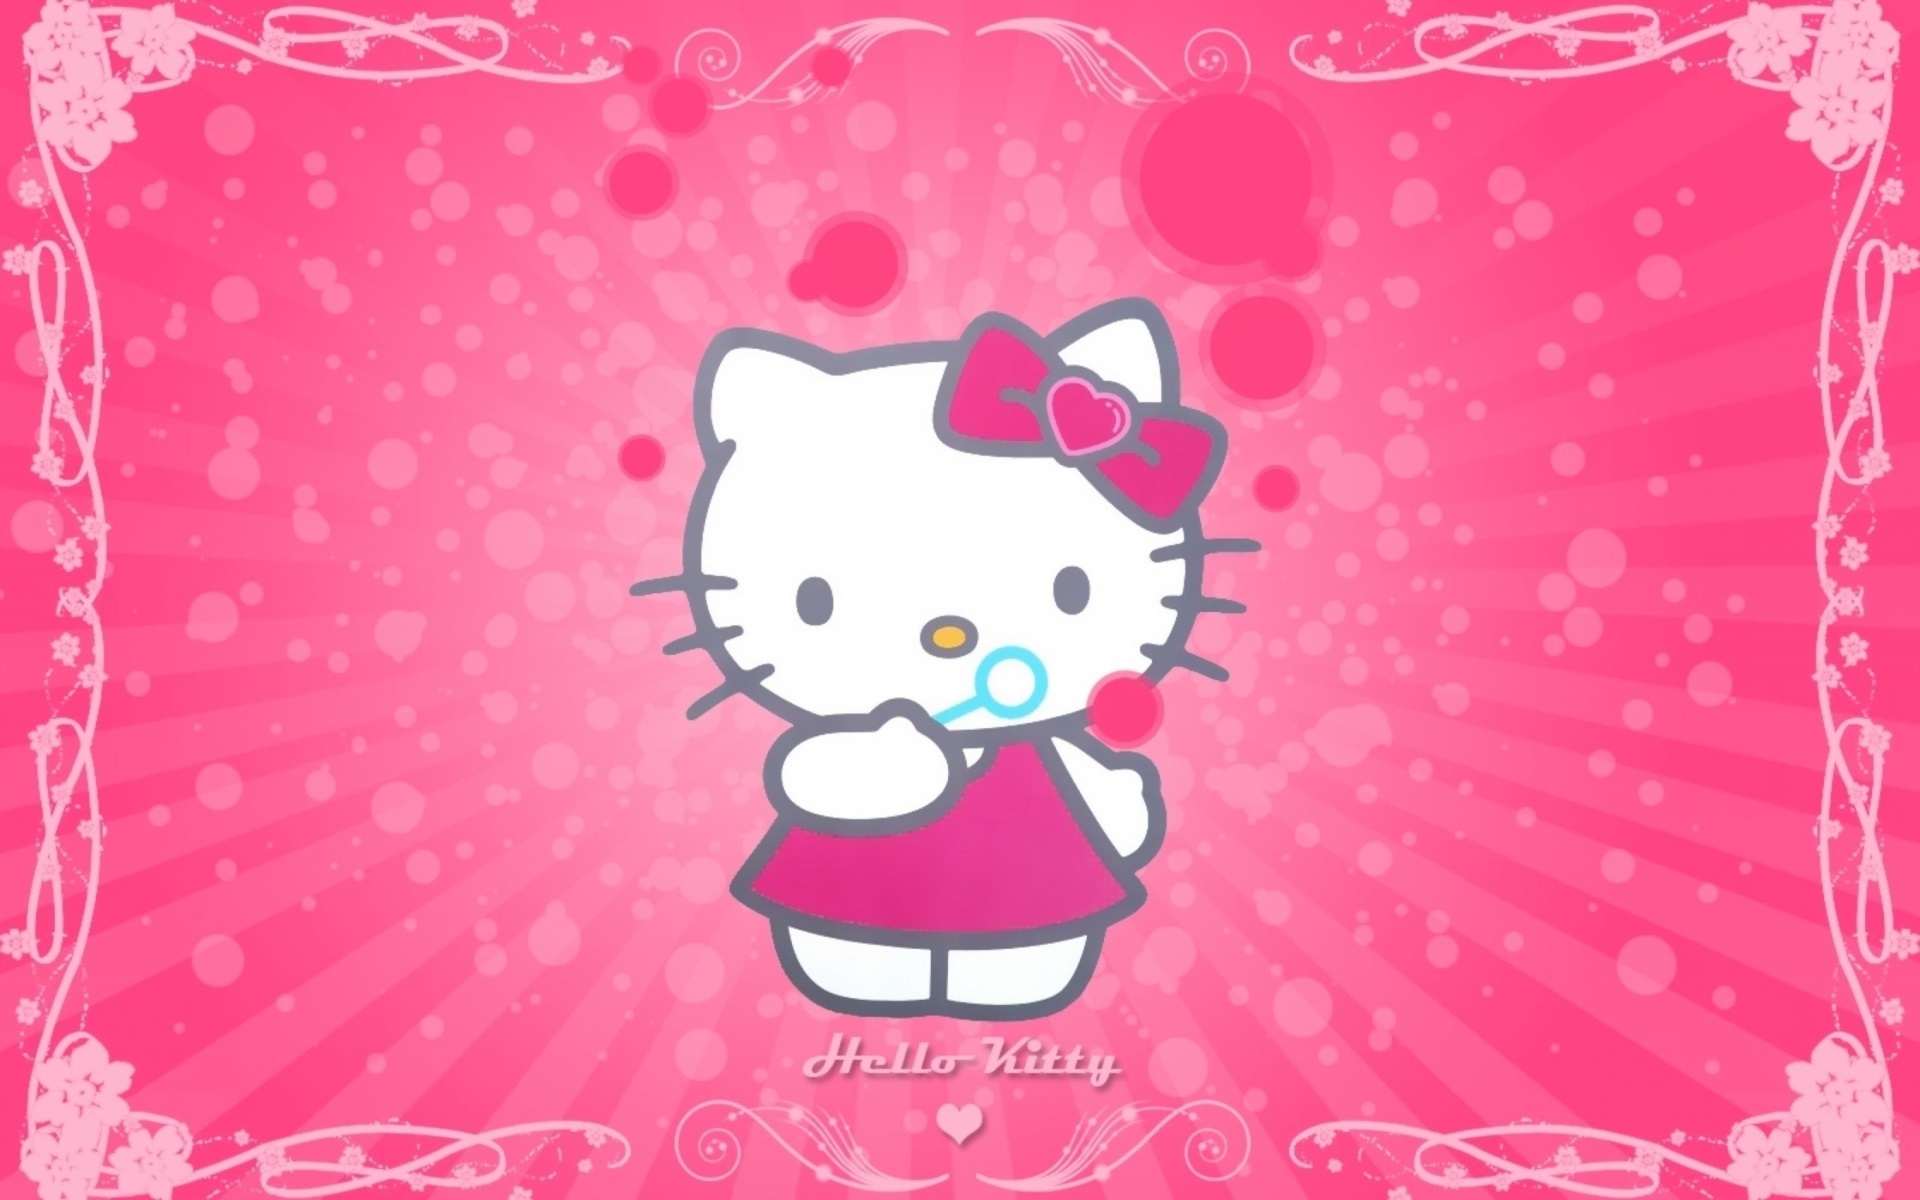 Fond d'ecran Hello Kitty fait des bulles